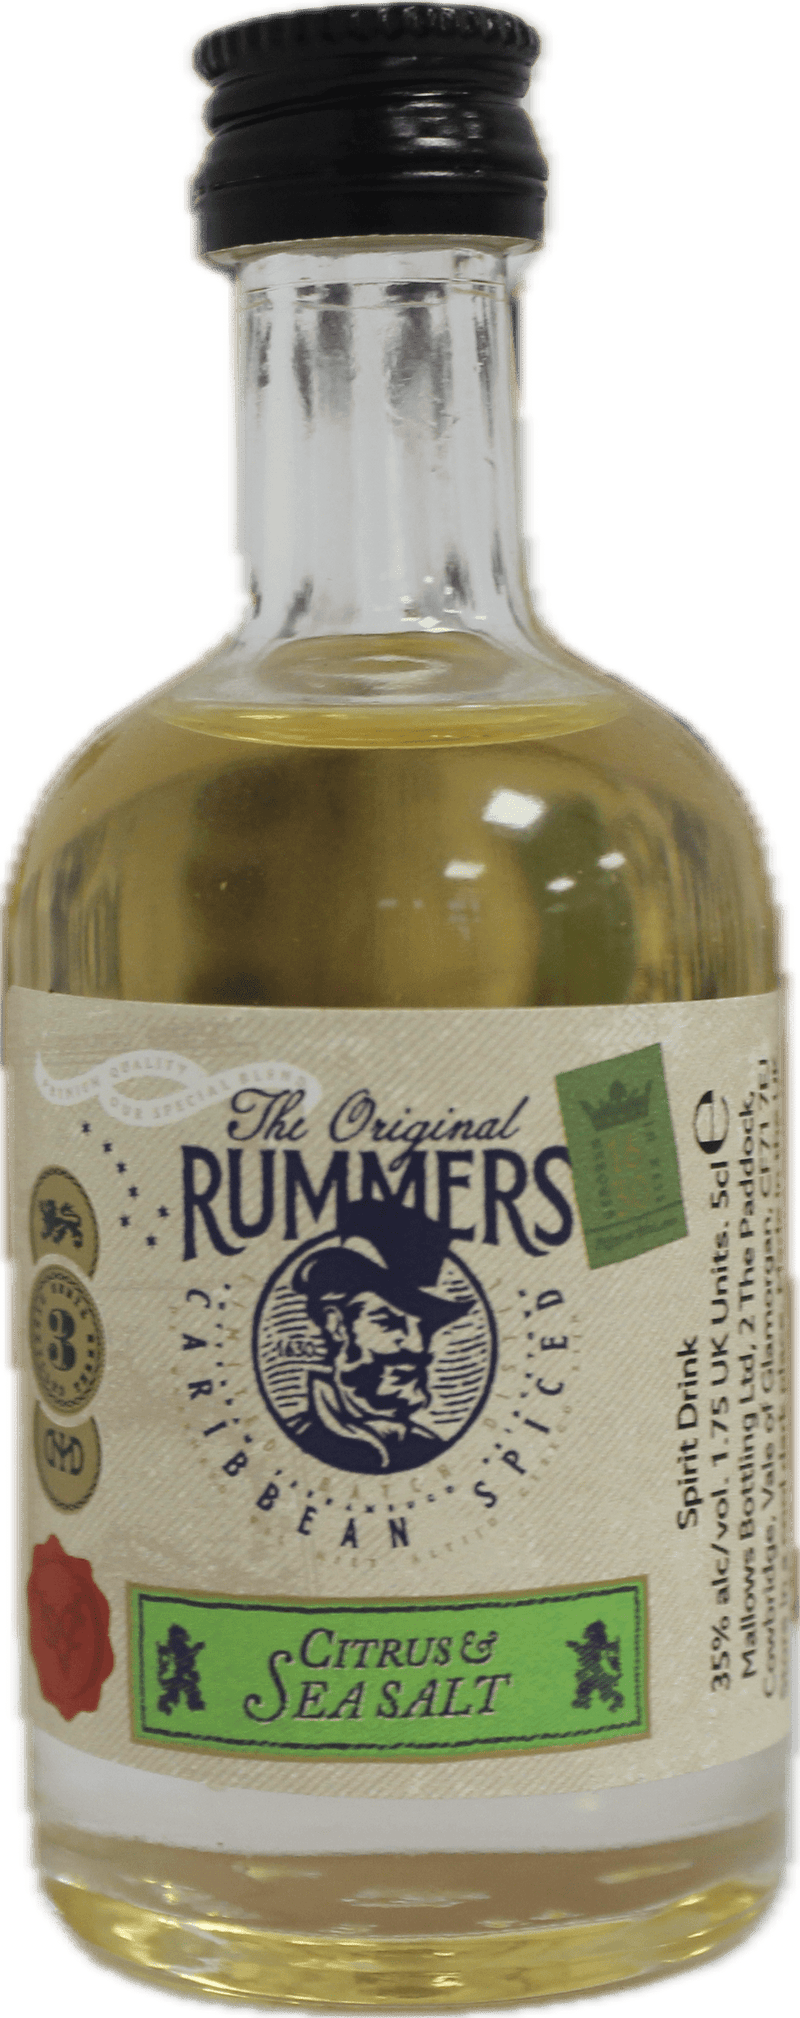 The Original Rummers Citrus & Sea Salt Rum Miniature 5cl